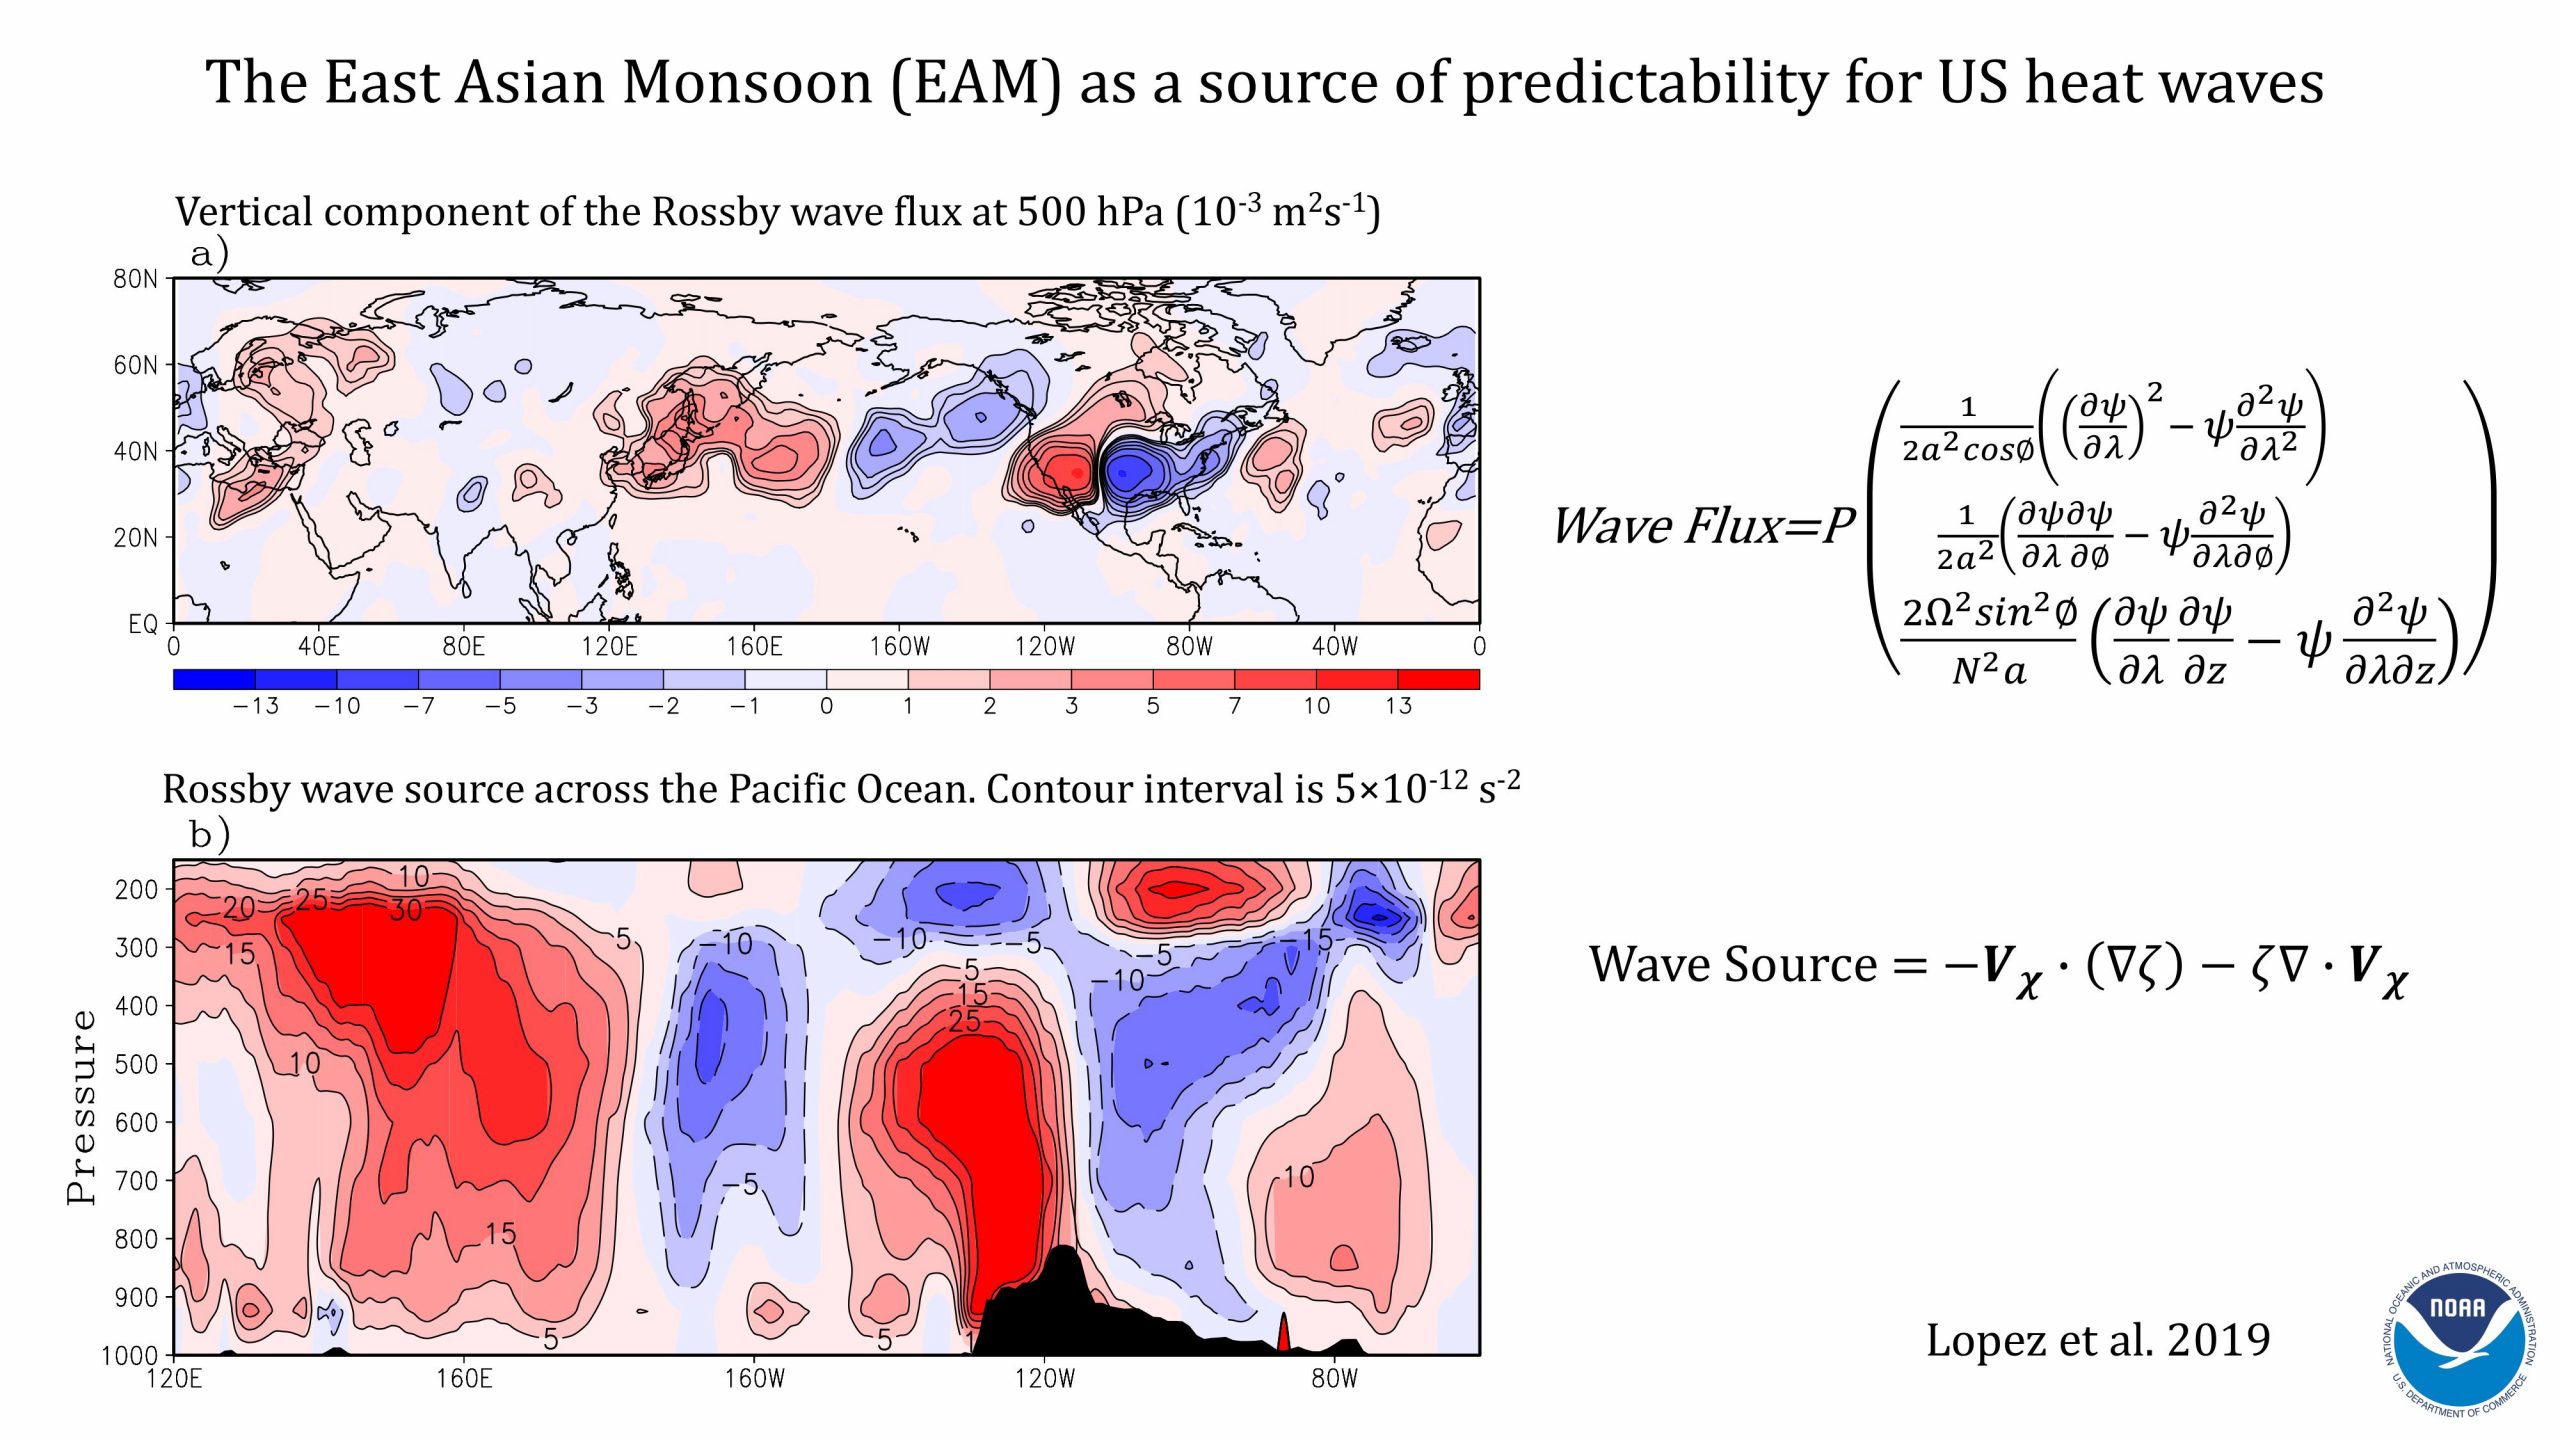 Hosmay Lopez Monsoon and Heat Waves presentation. Slide 17